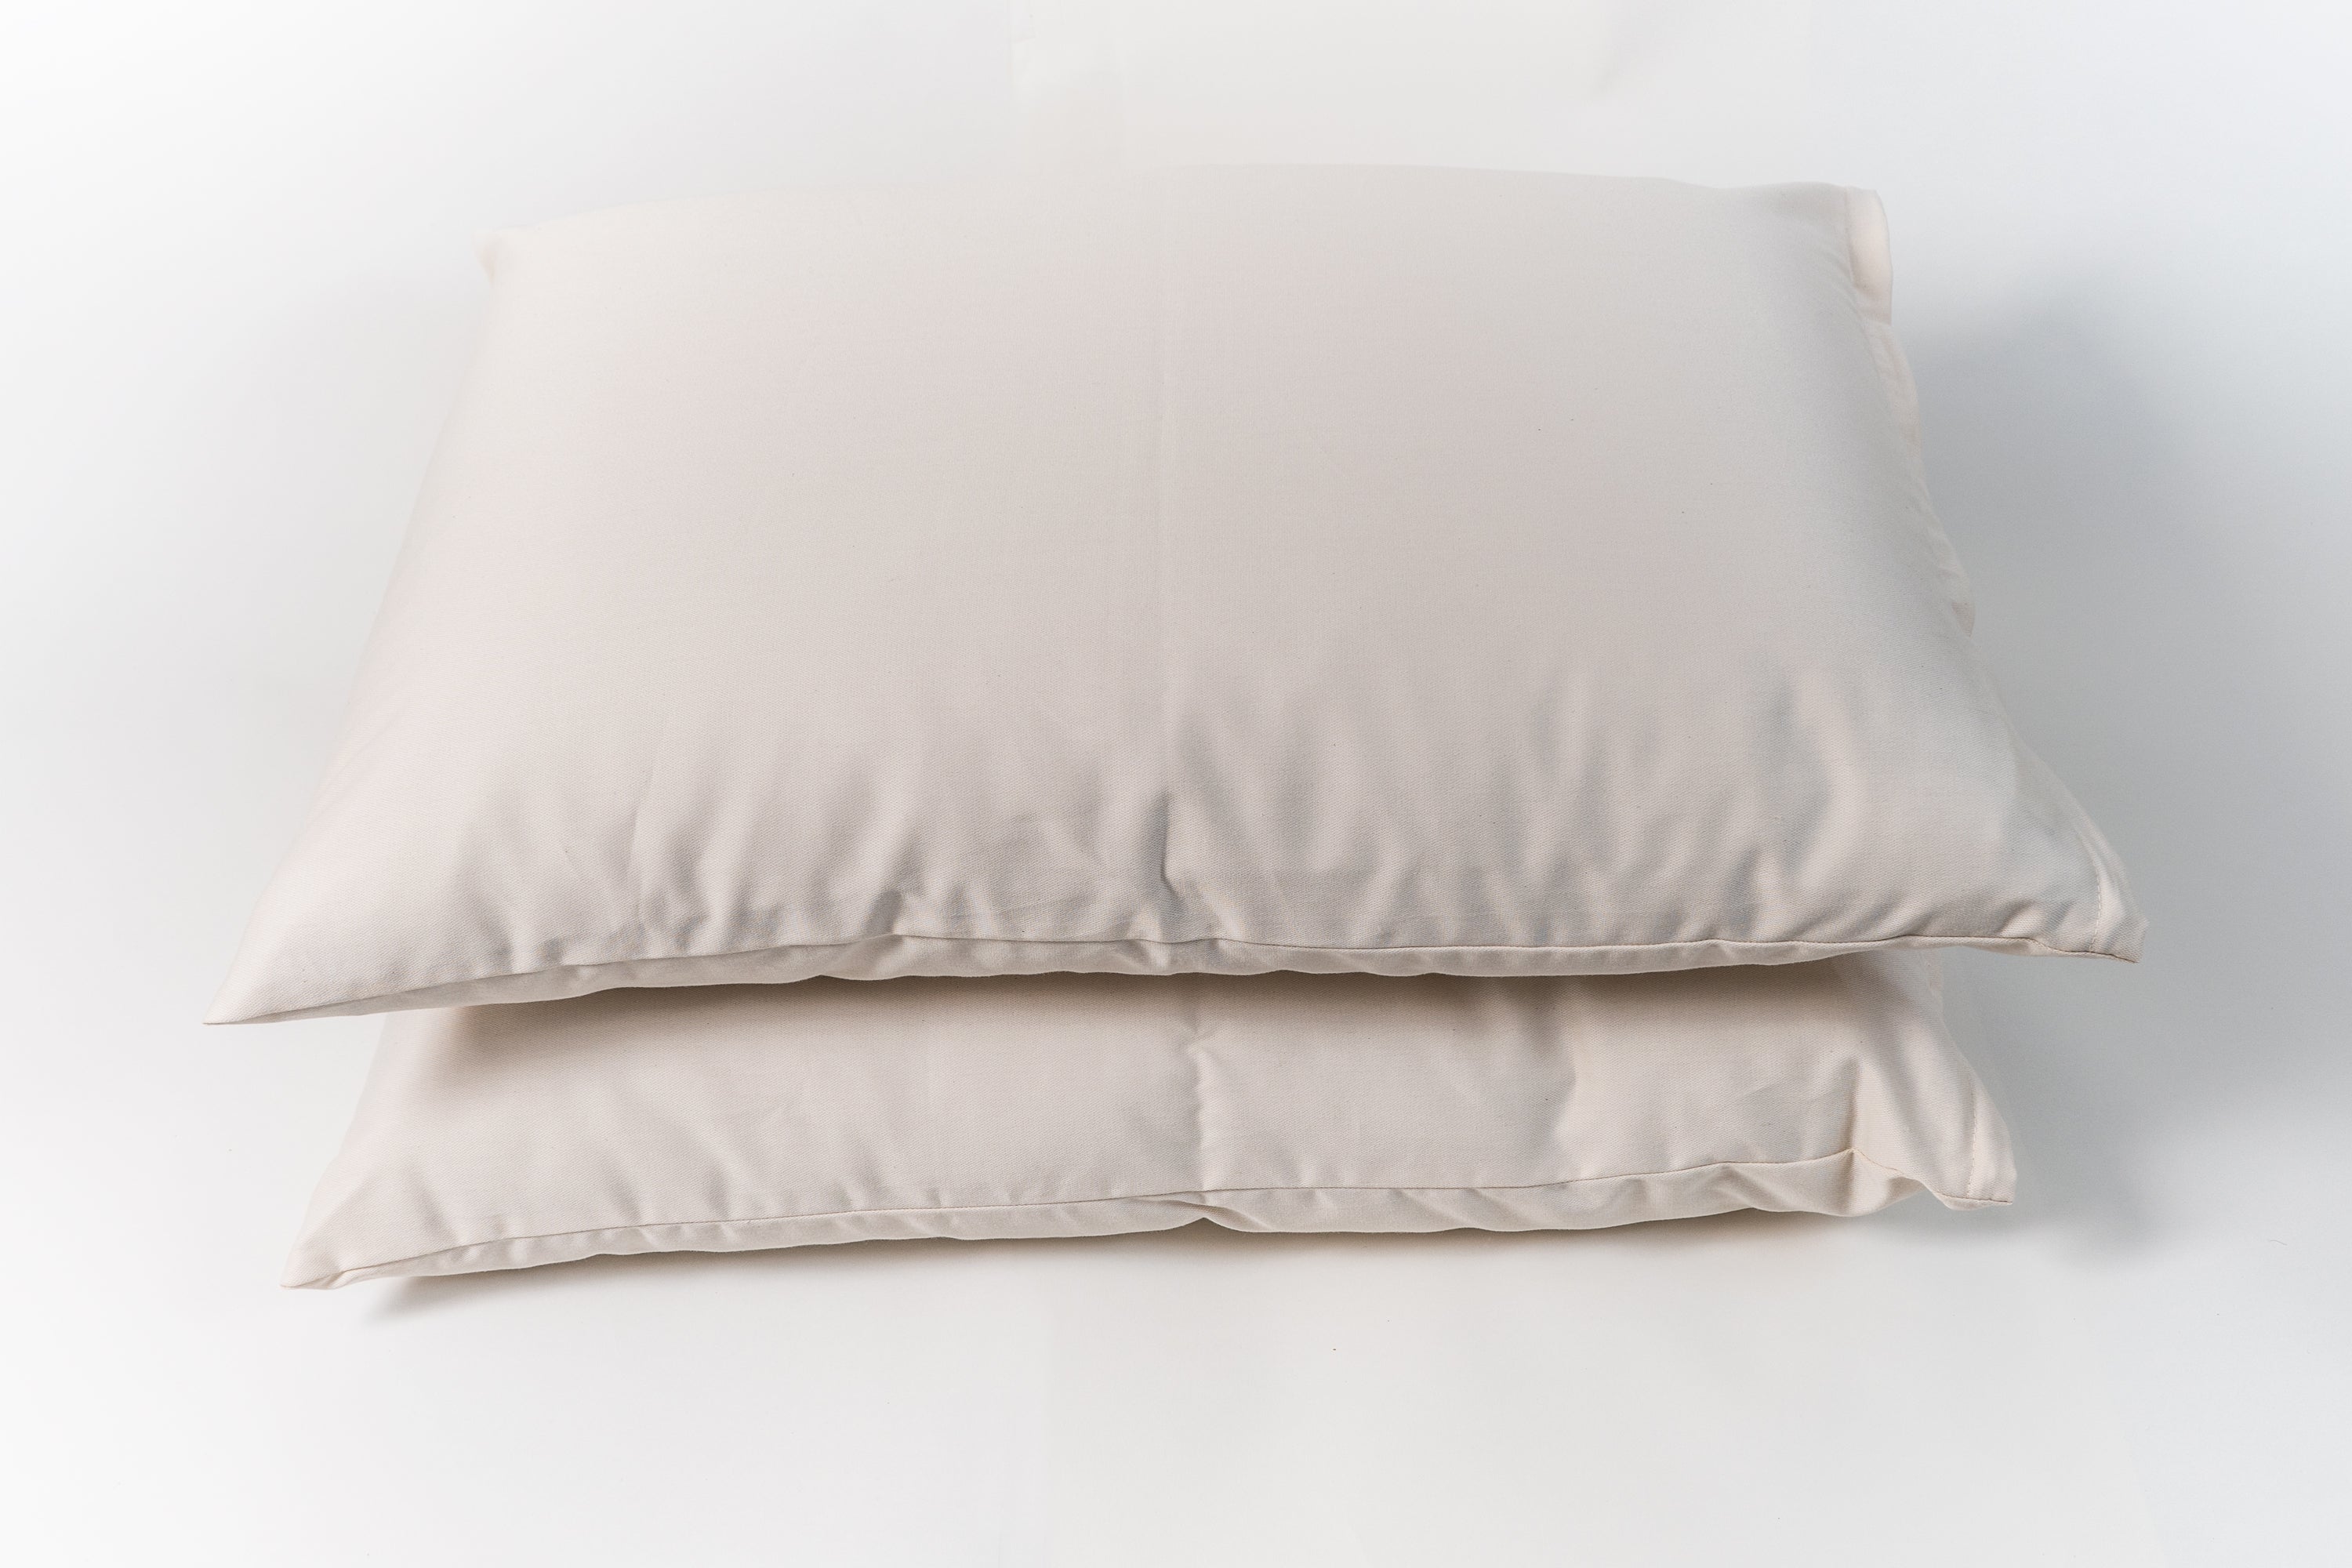 TOM Organic Woolly Bolas Pillow - Free Shipping! - The Organic Mattress